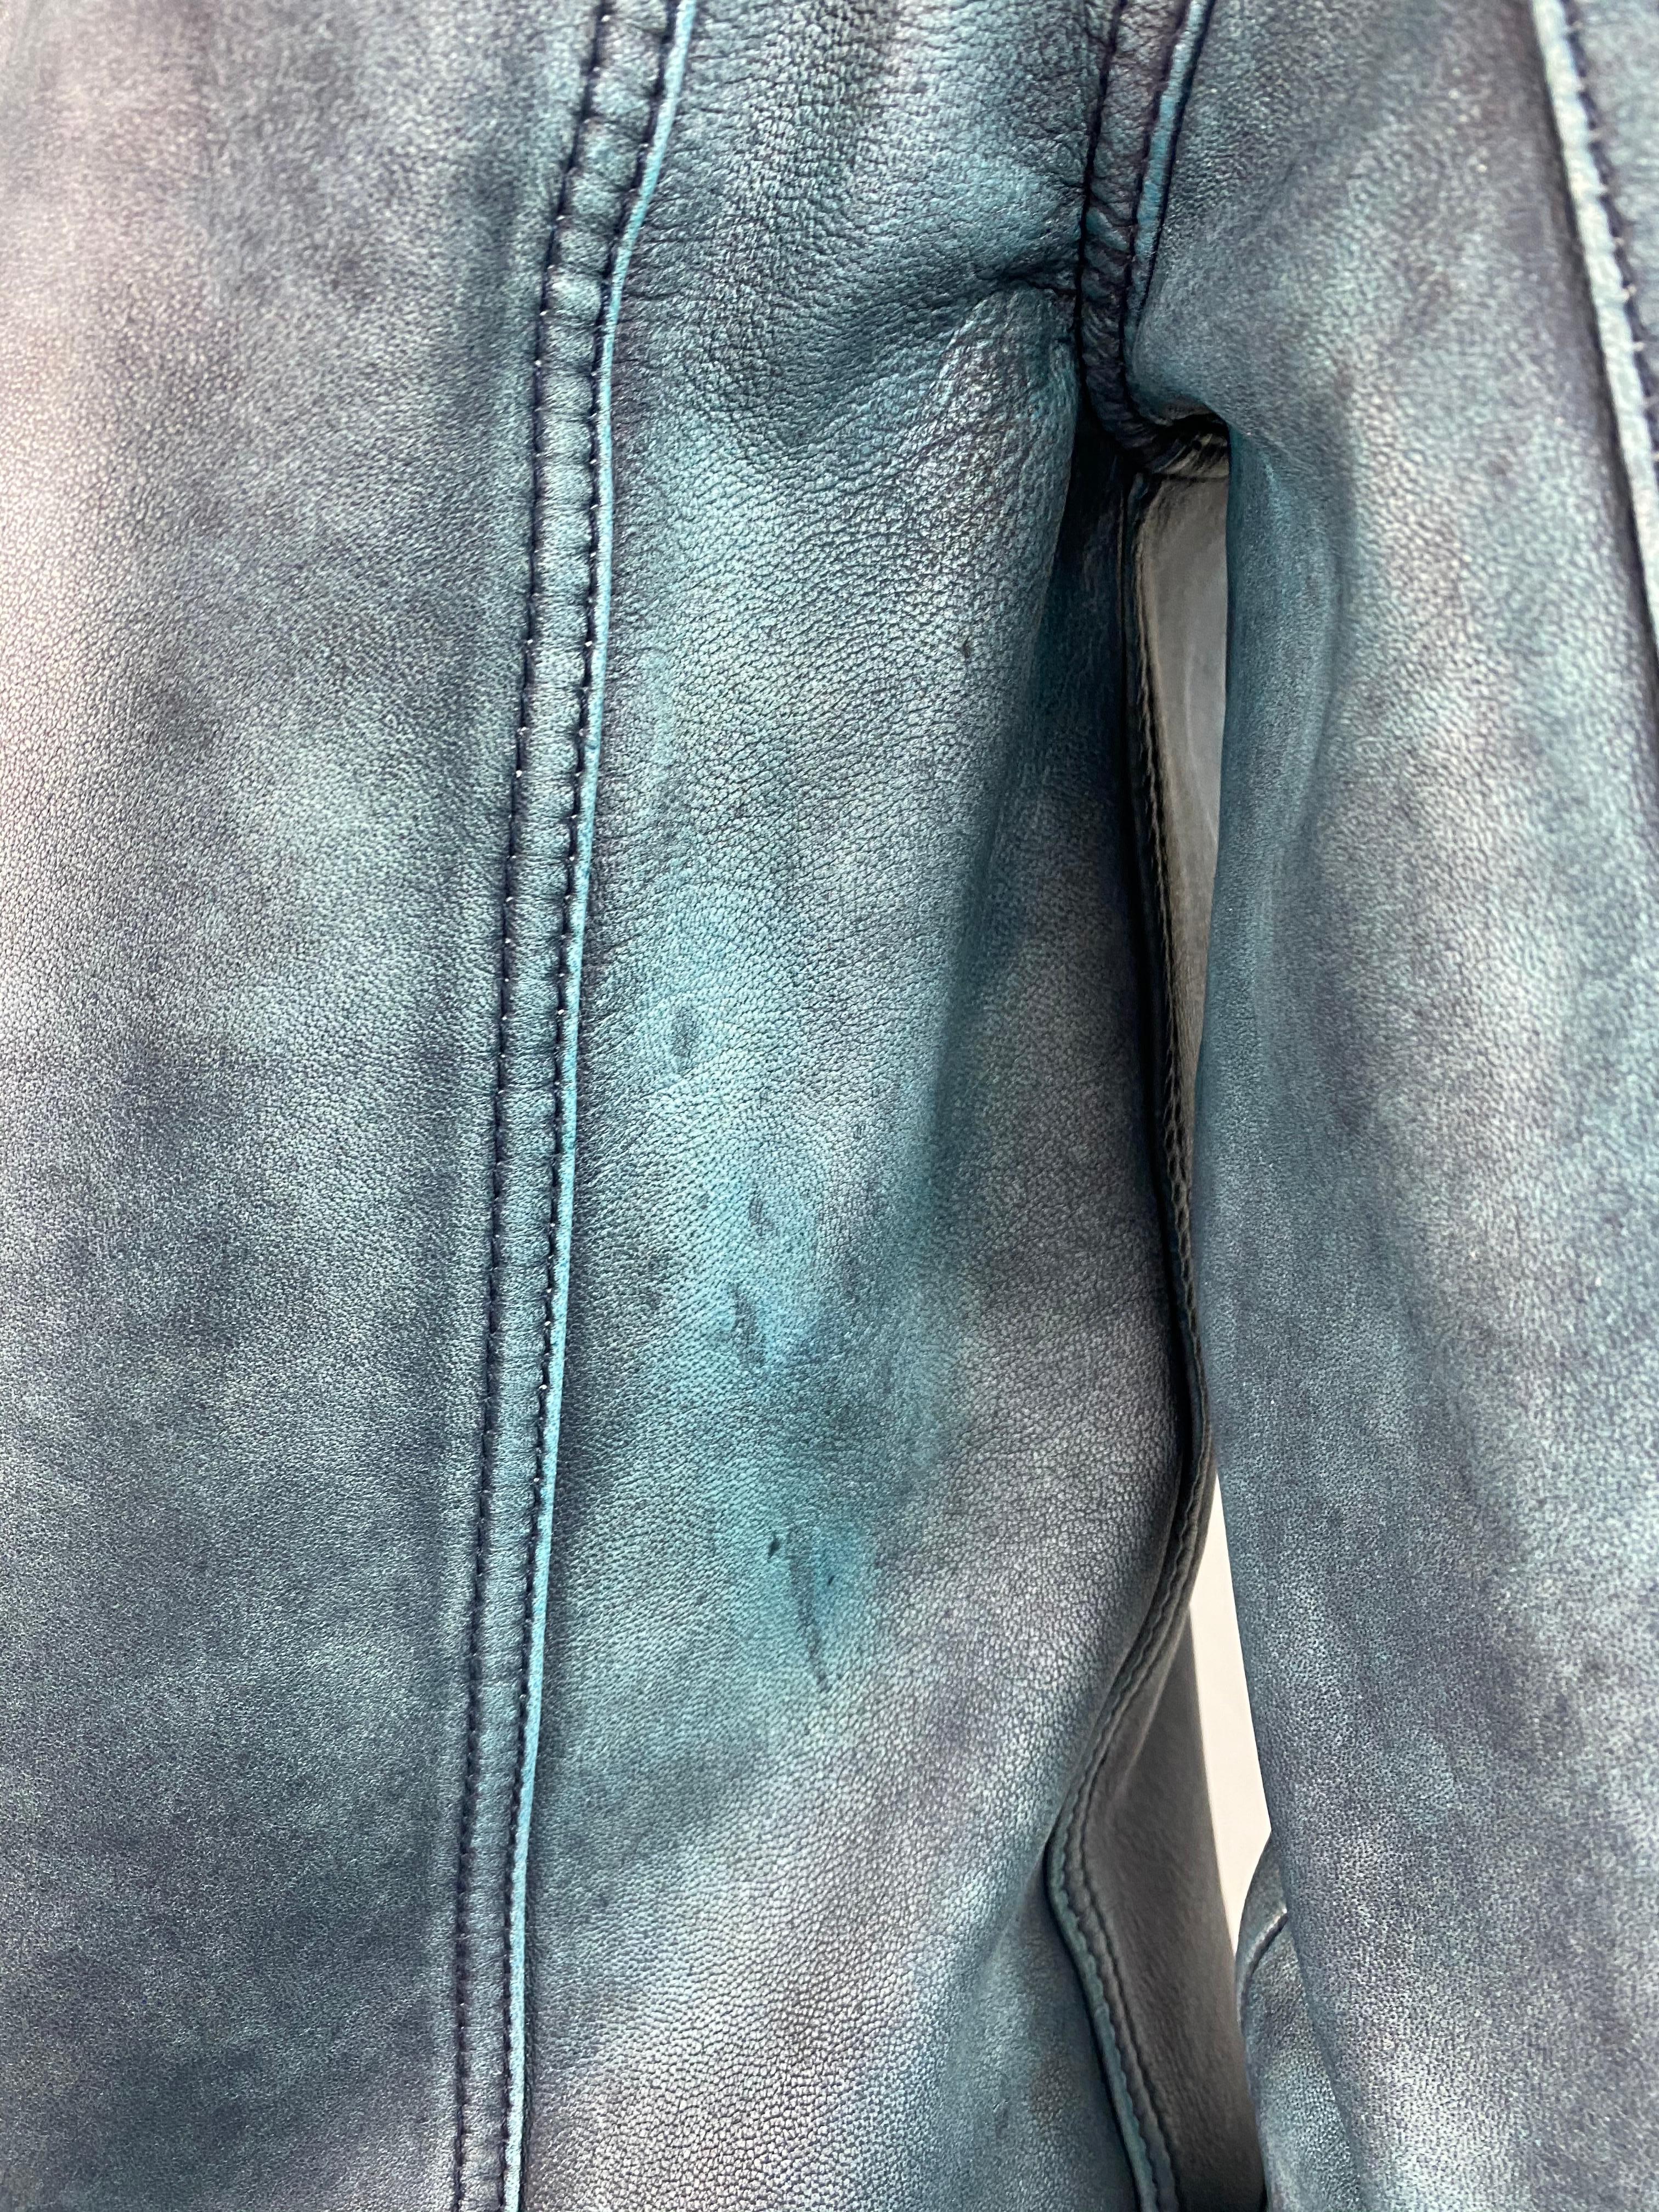 Gray Derek Lam 10 Crosby Blue Leather Jacket, Size 4 For Sale